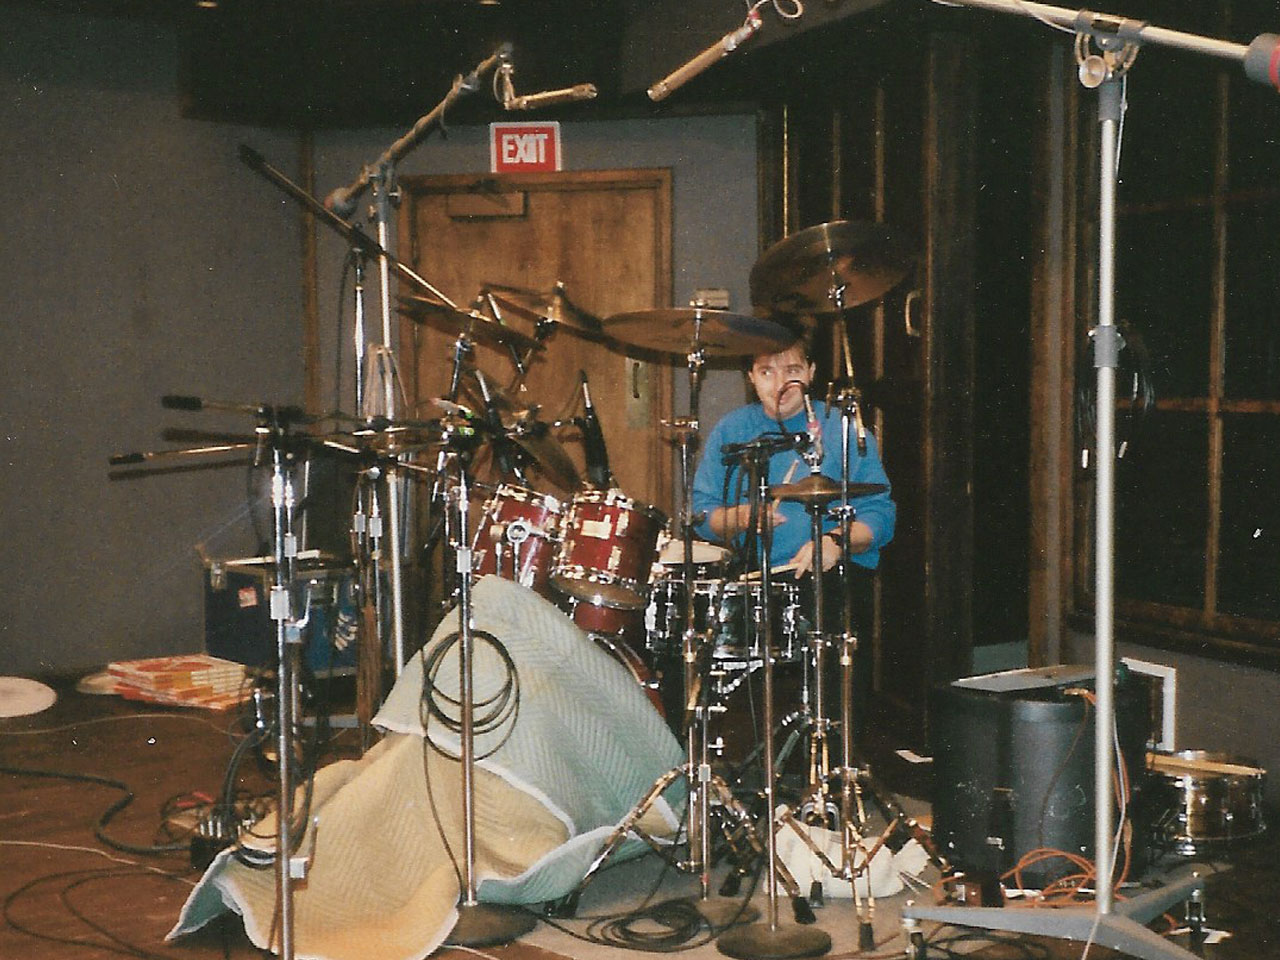 Recording the RTZ album in Los Angeles at The Village Recorder.